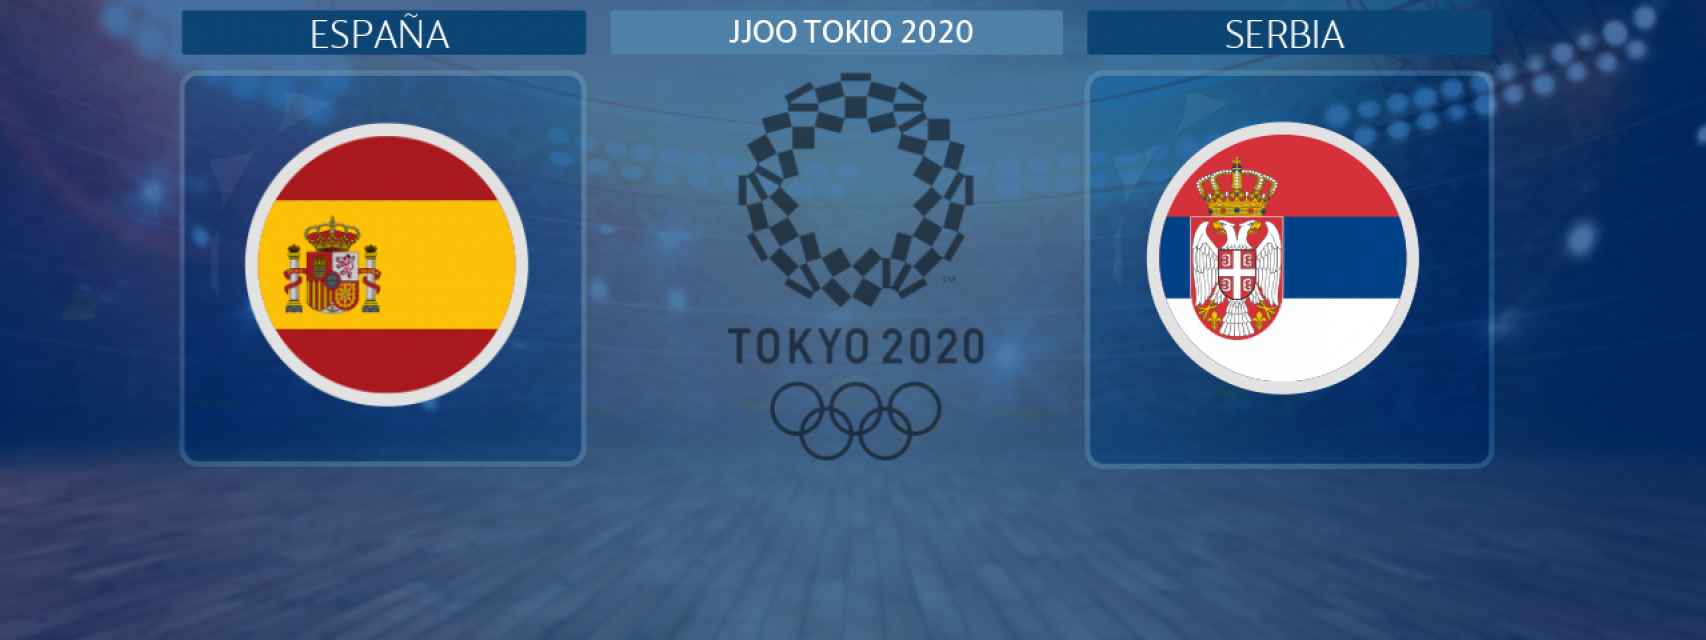 España - Serbia, partido de baloncesto femenino de los JJOO Tokio 2020